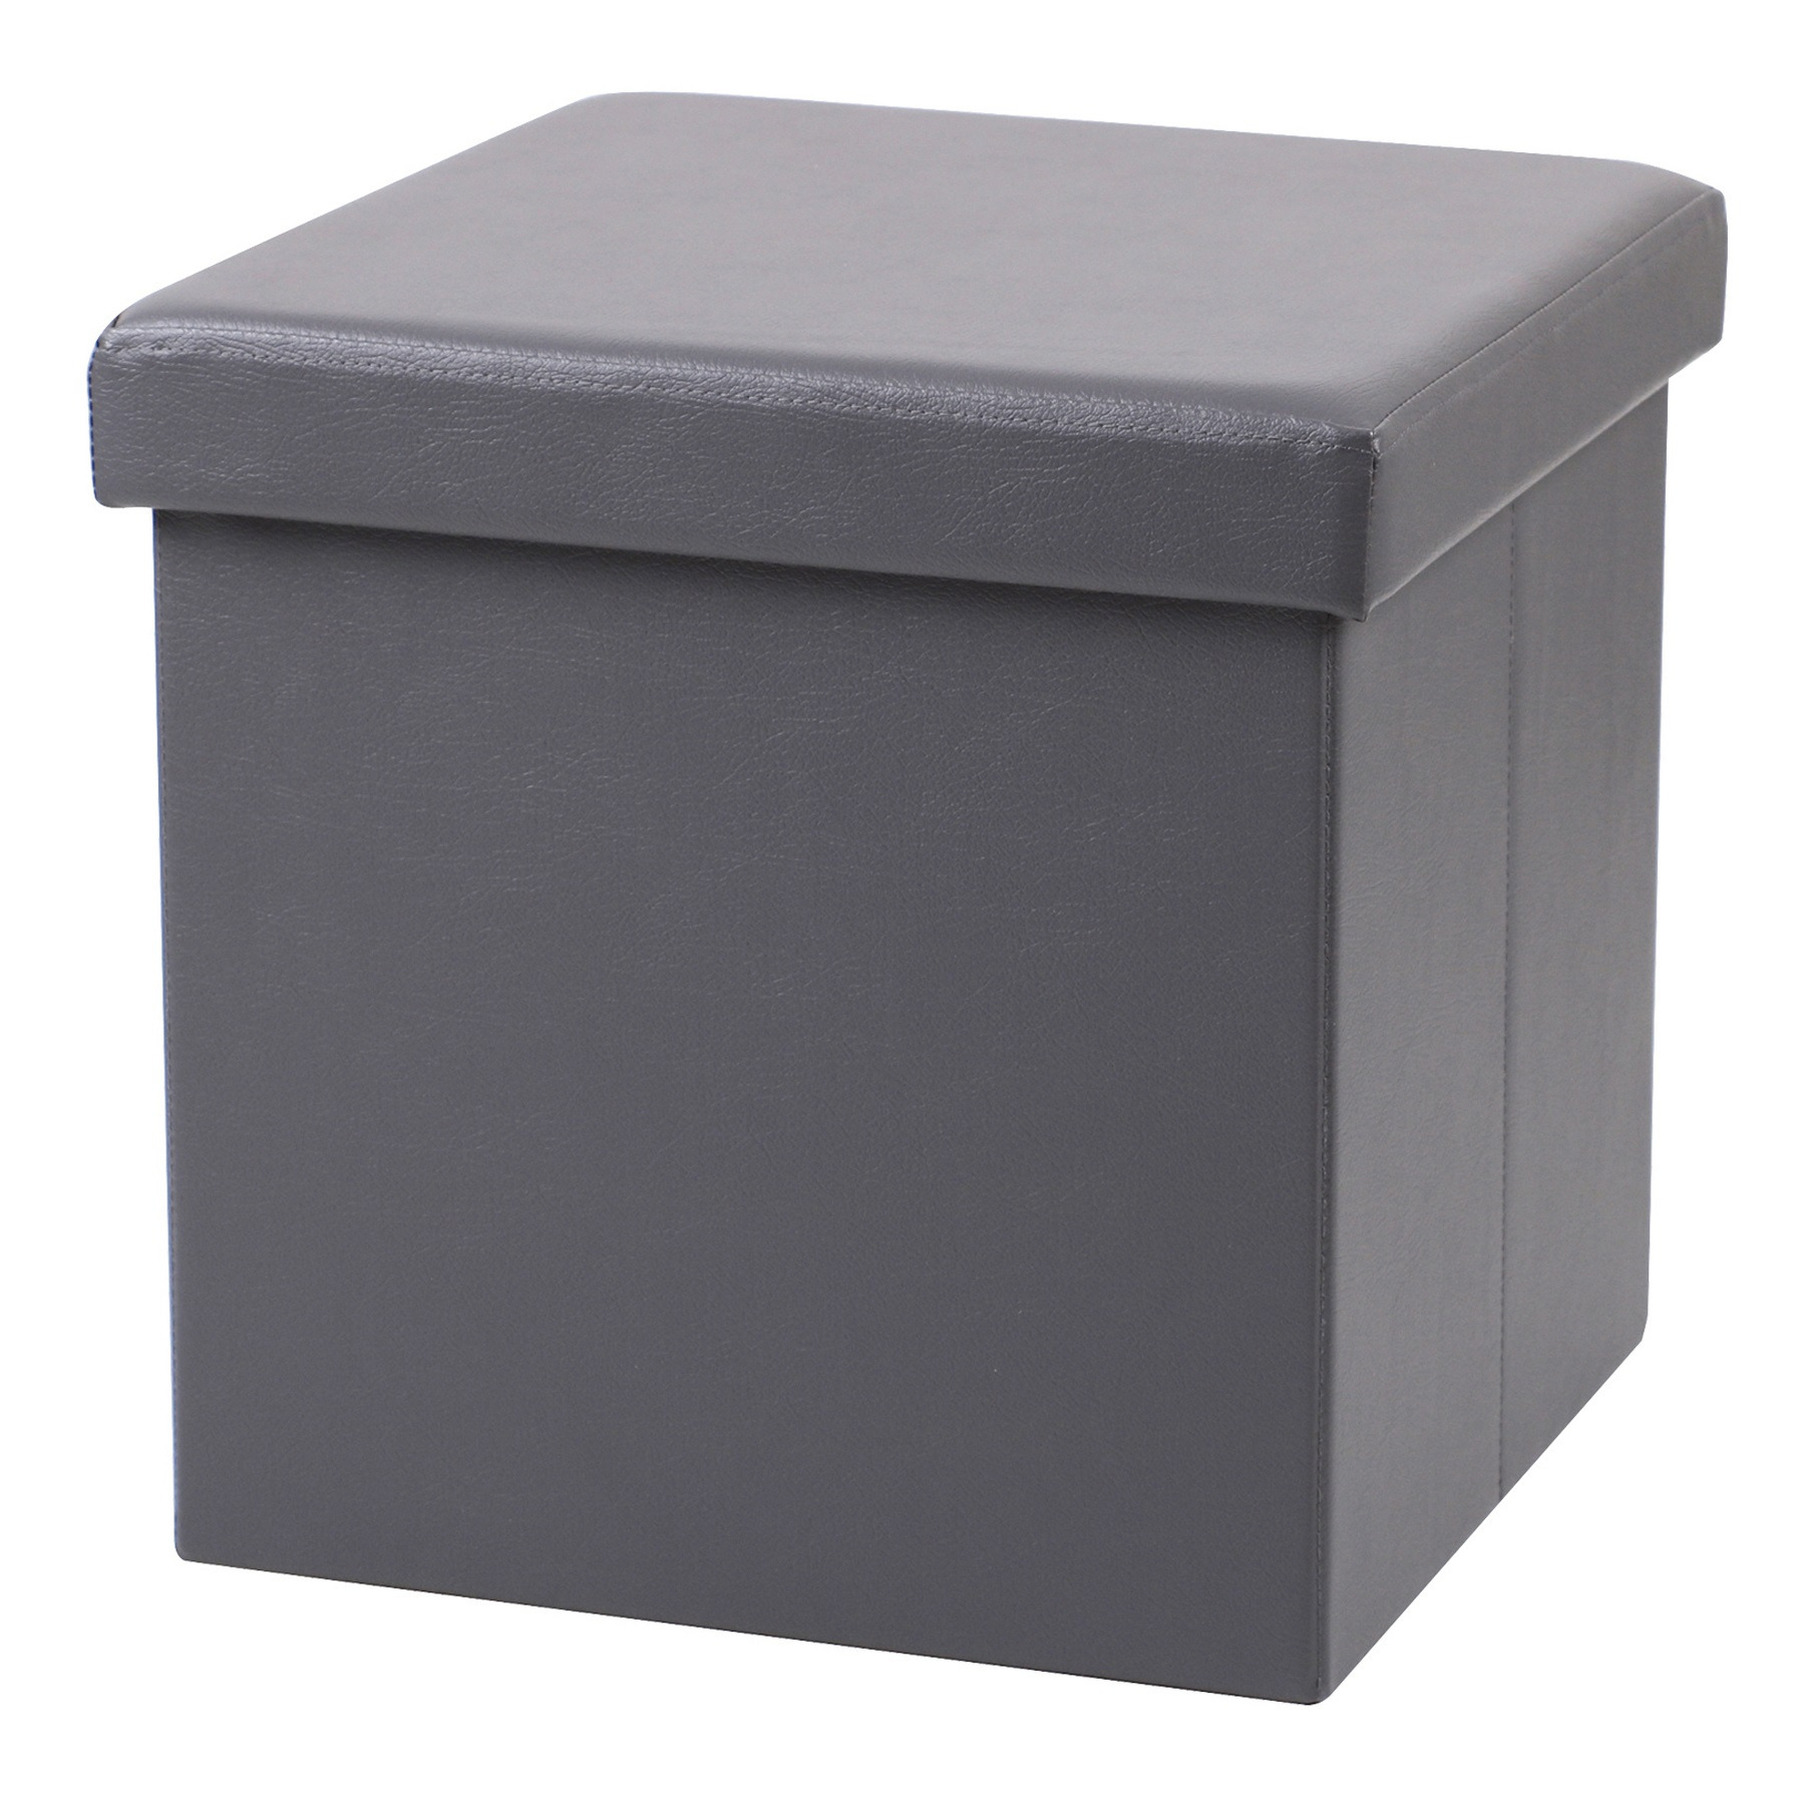 Poef Leather BOX hocker opbergbox grijs PU-mdf 38 x 38 cm opvouwbaar